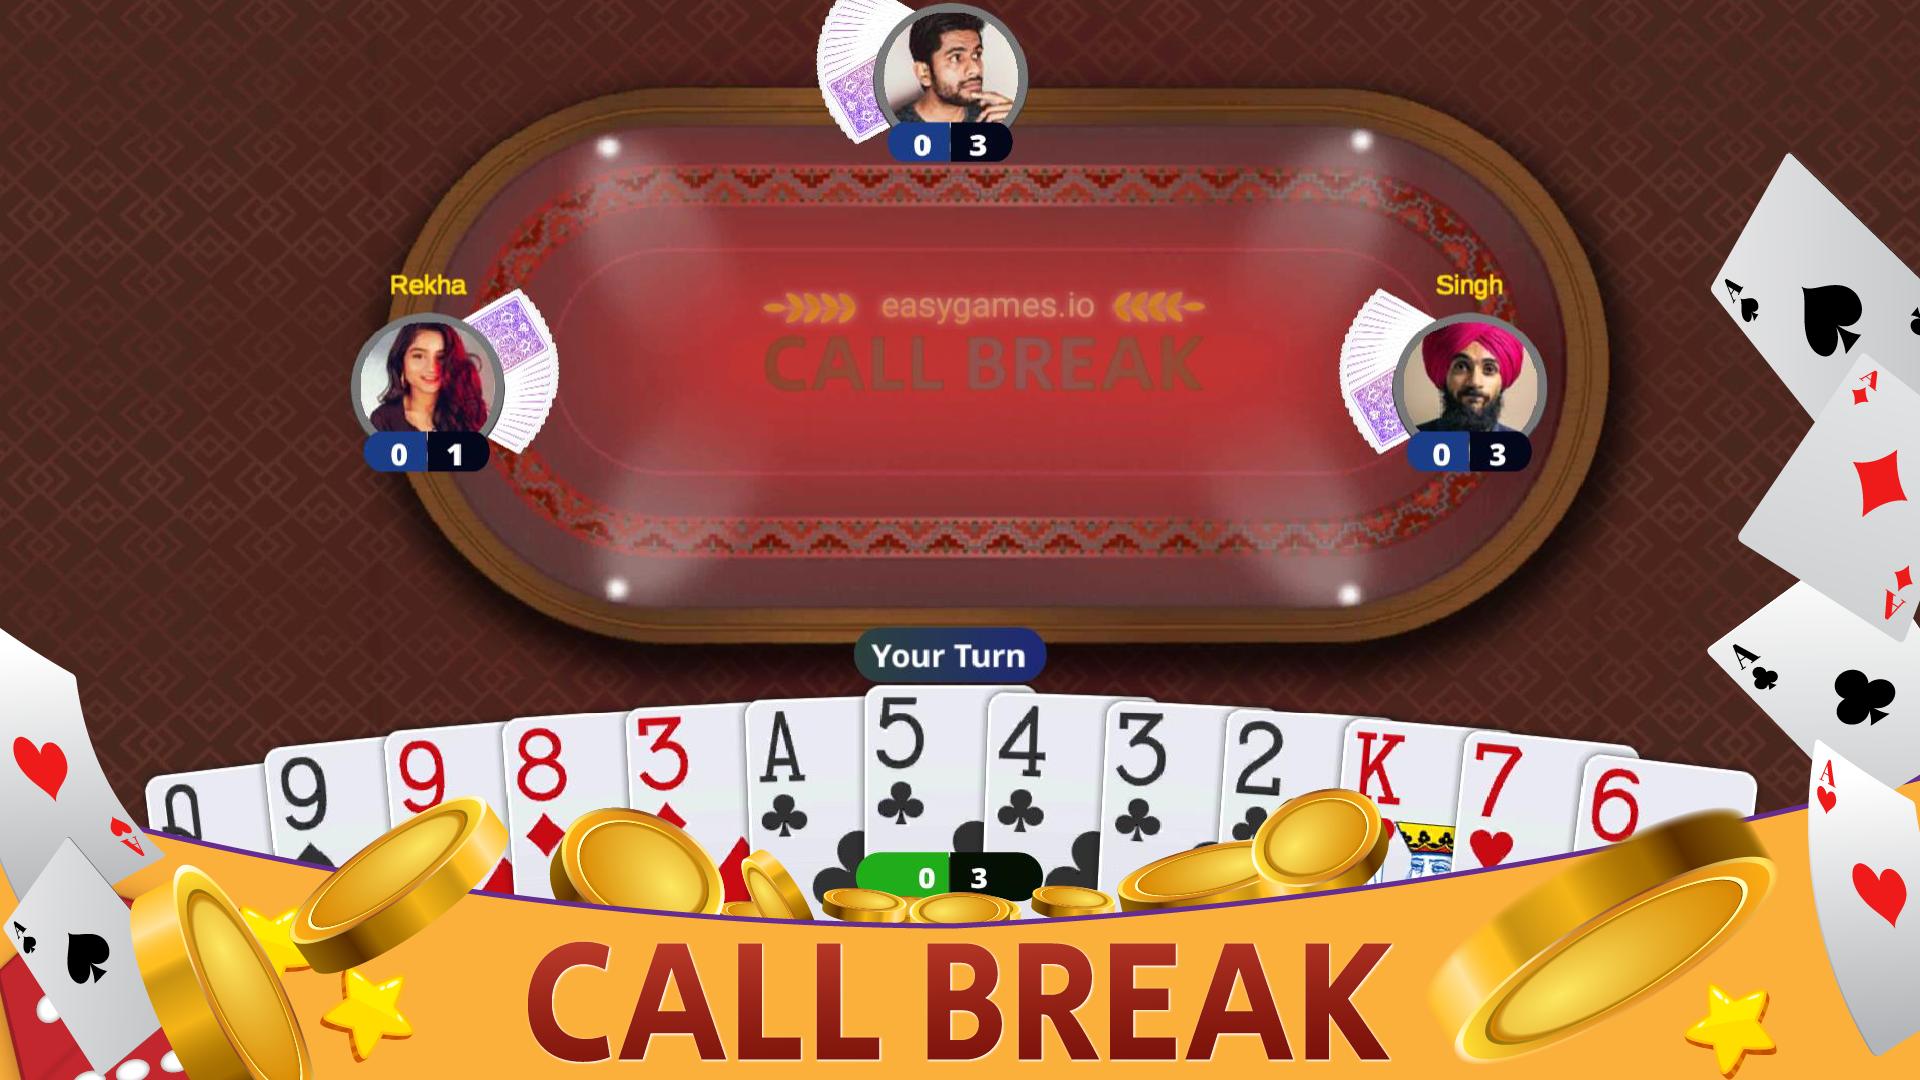 Callbreak, Ludo, Rummy & 9 Card Game -Easygames.io 20210120 Screenshot 13